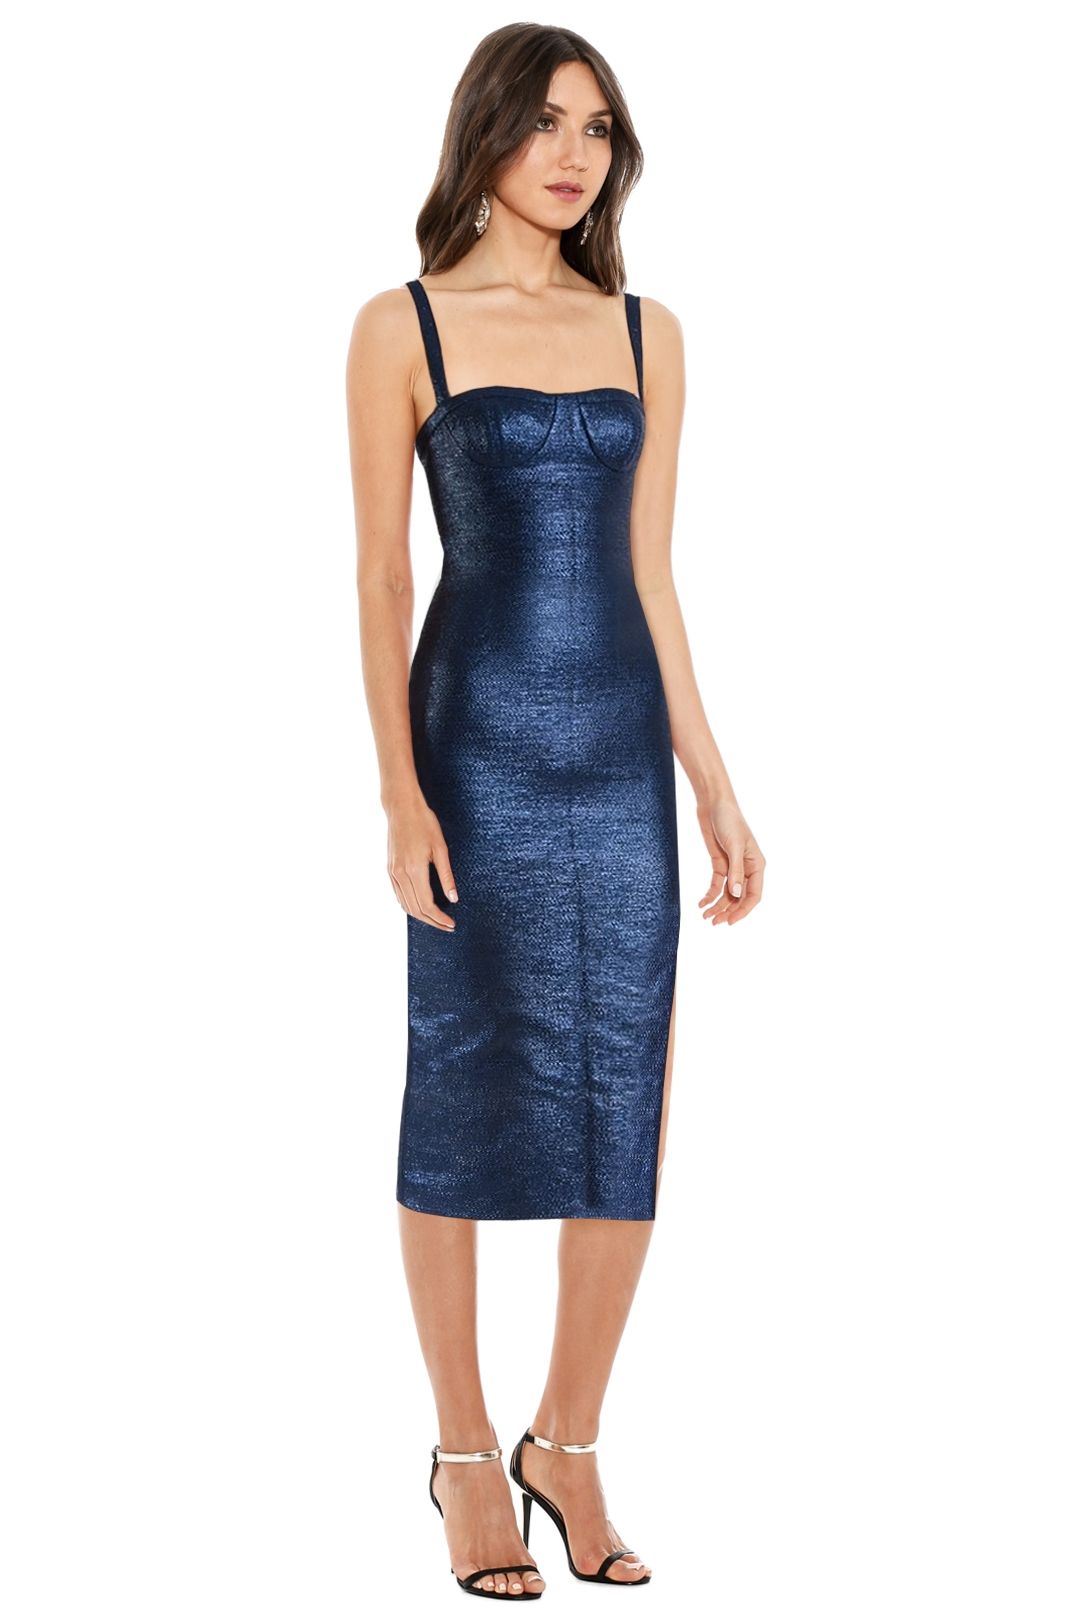 Manning Cartell - Moonscape Dress - Blue - Side